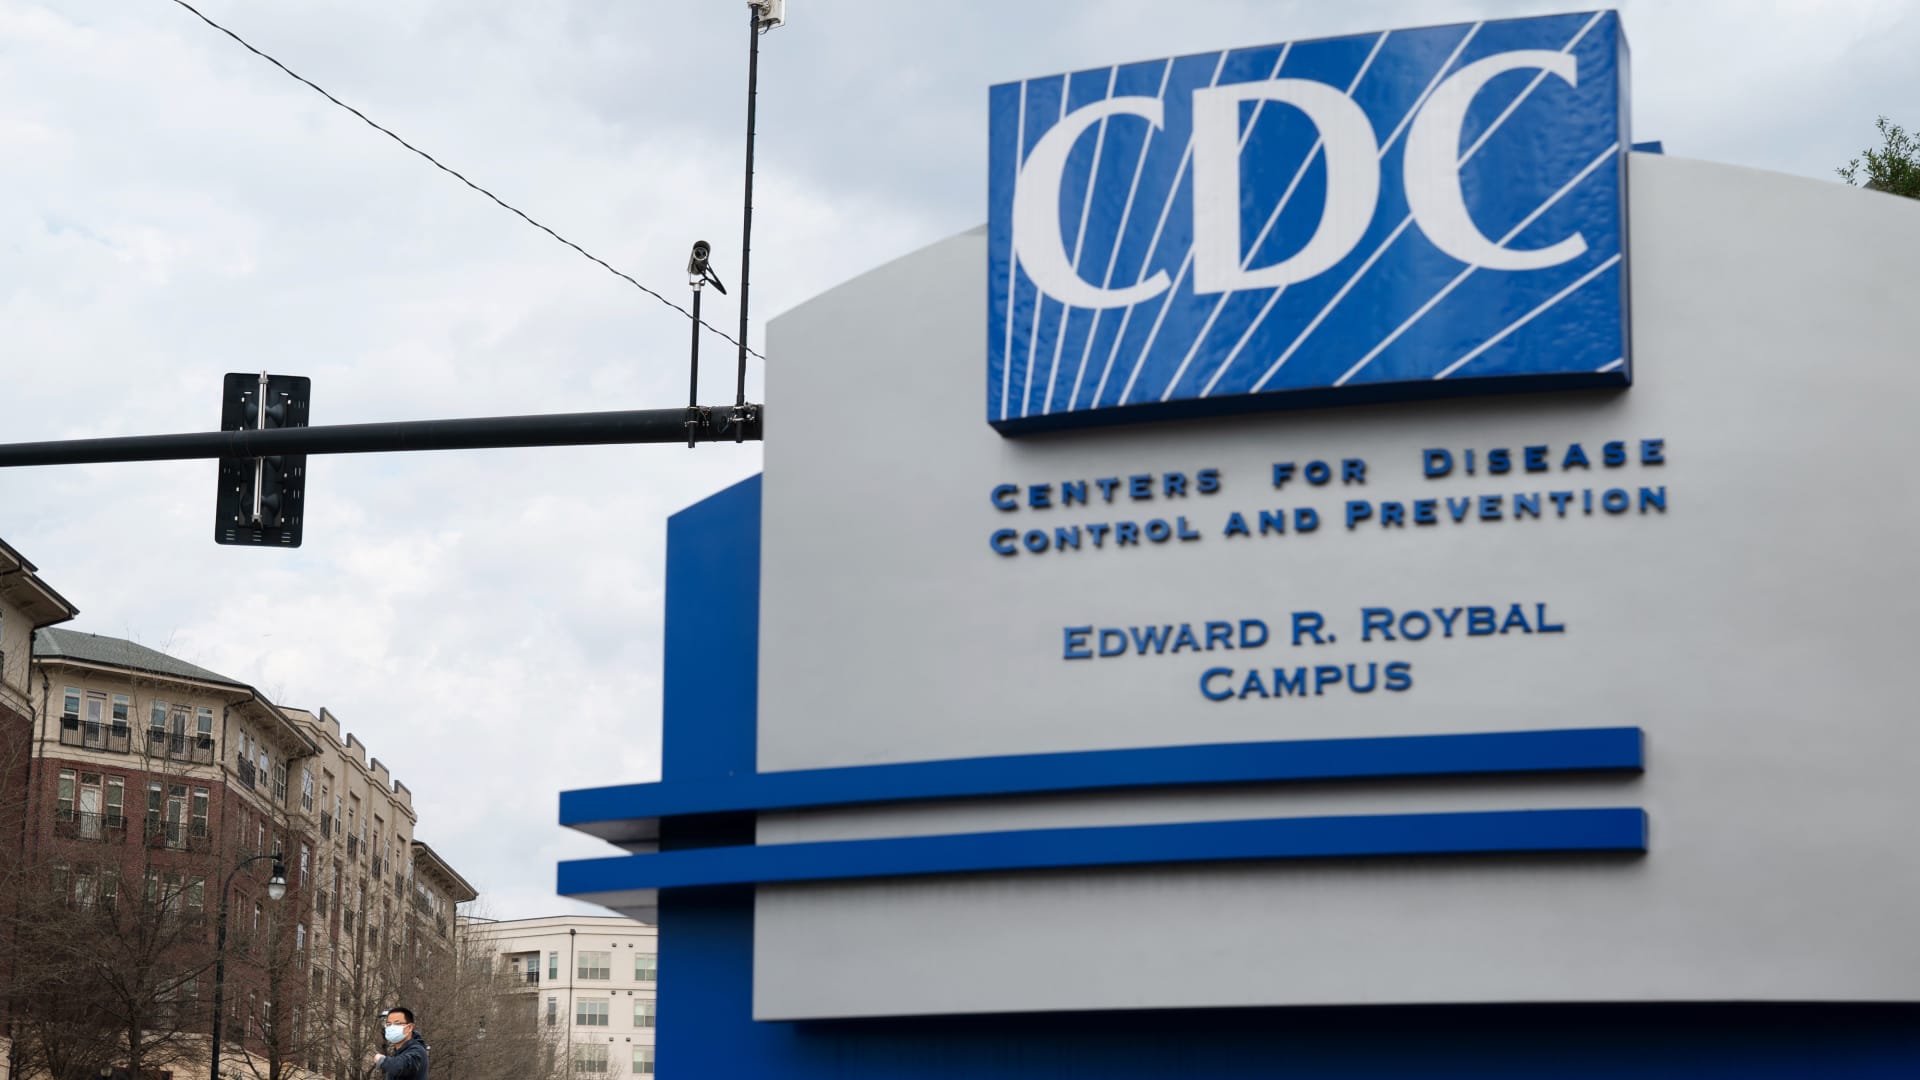 CDC headquarters in Atlanta